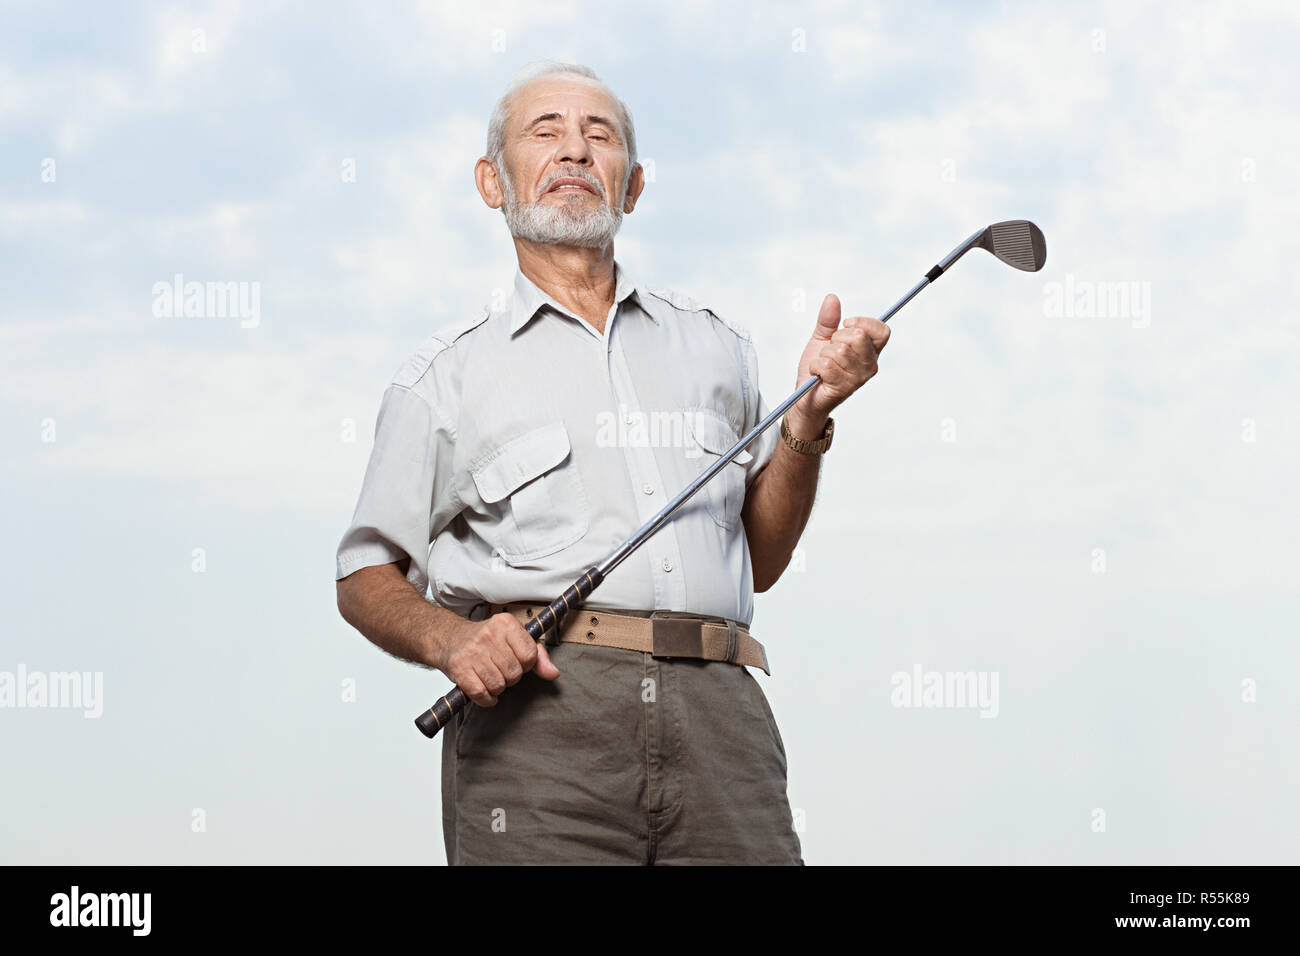 Man holding a golf club Stock Photo